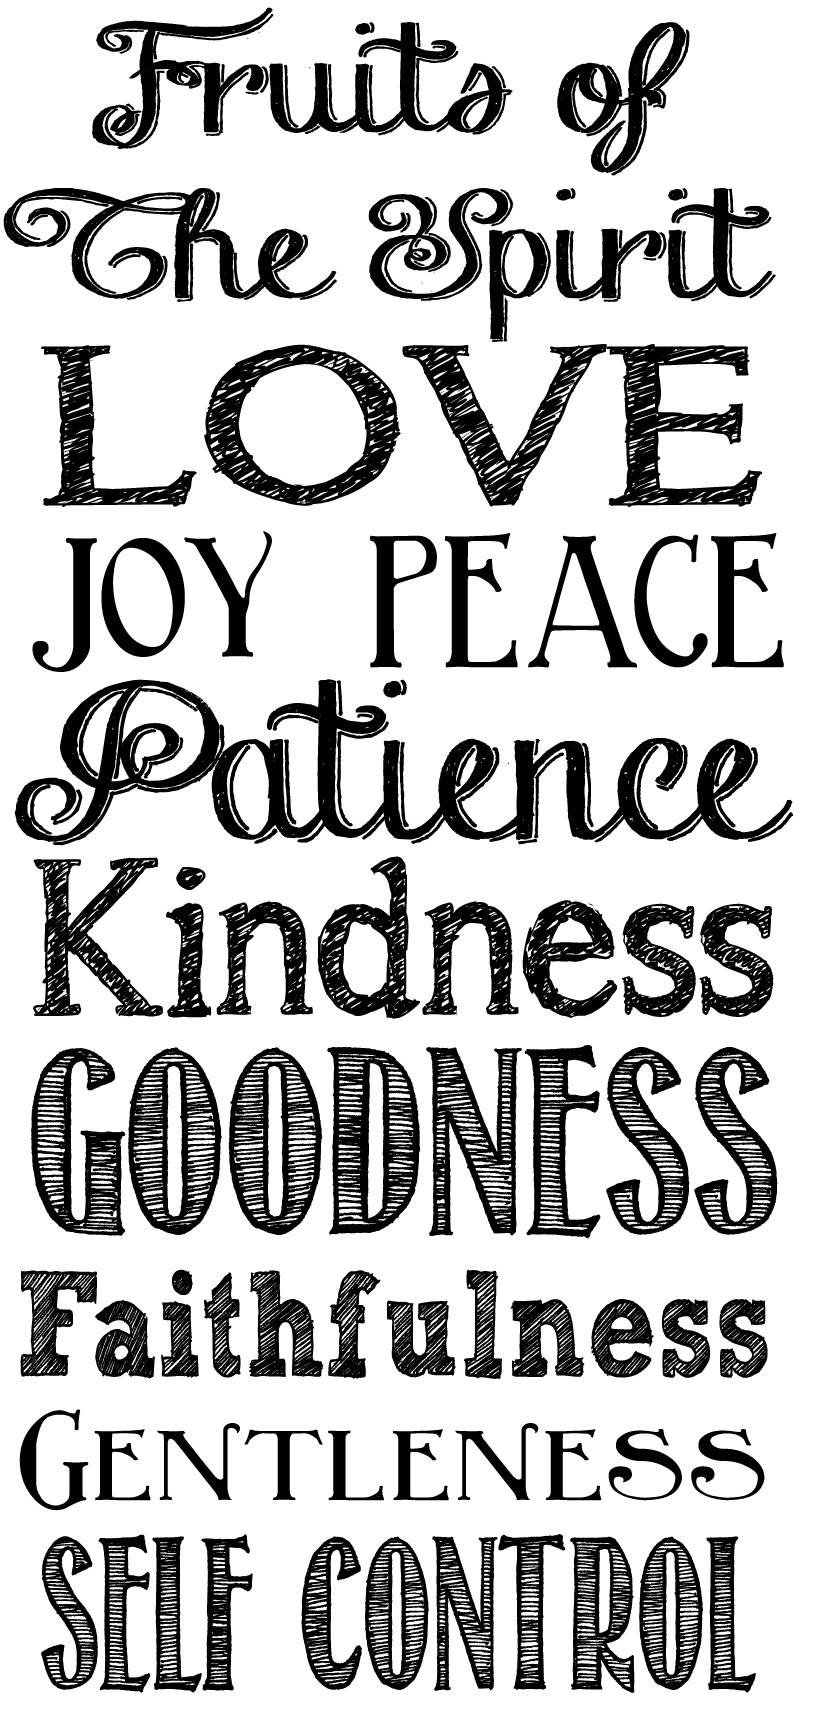 kindness clipart gentleness